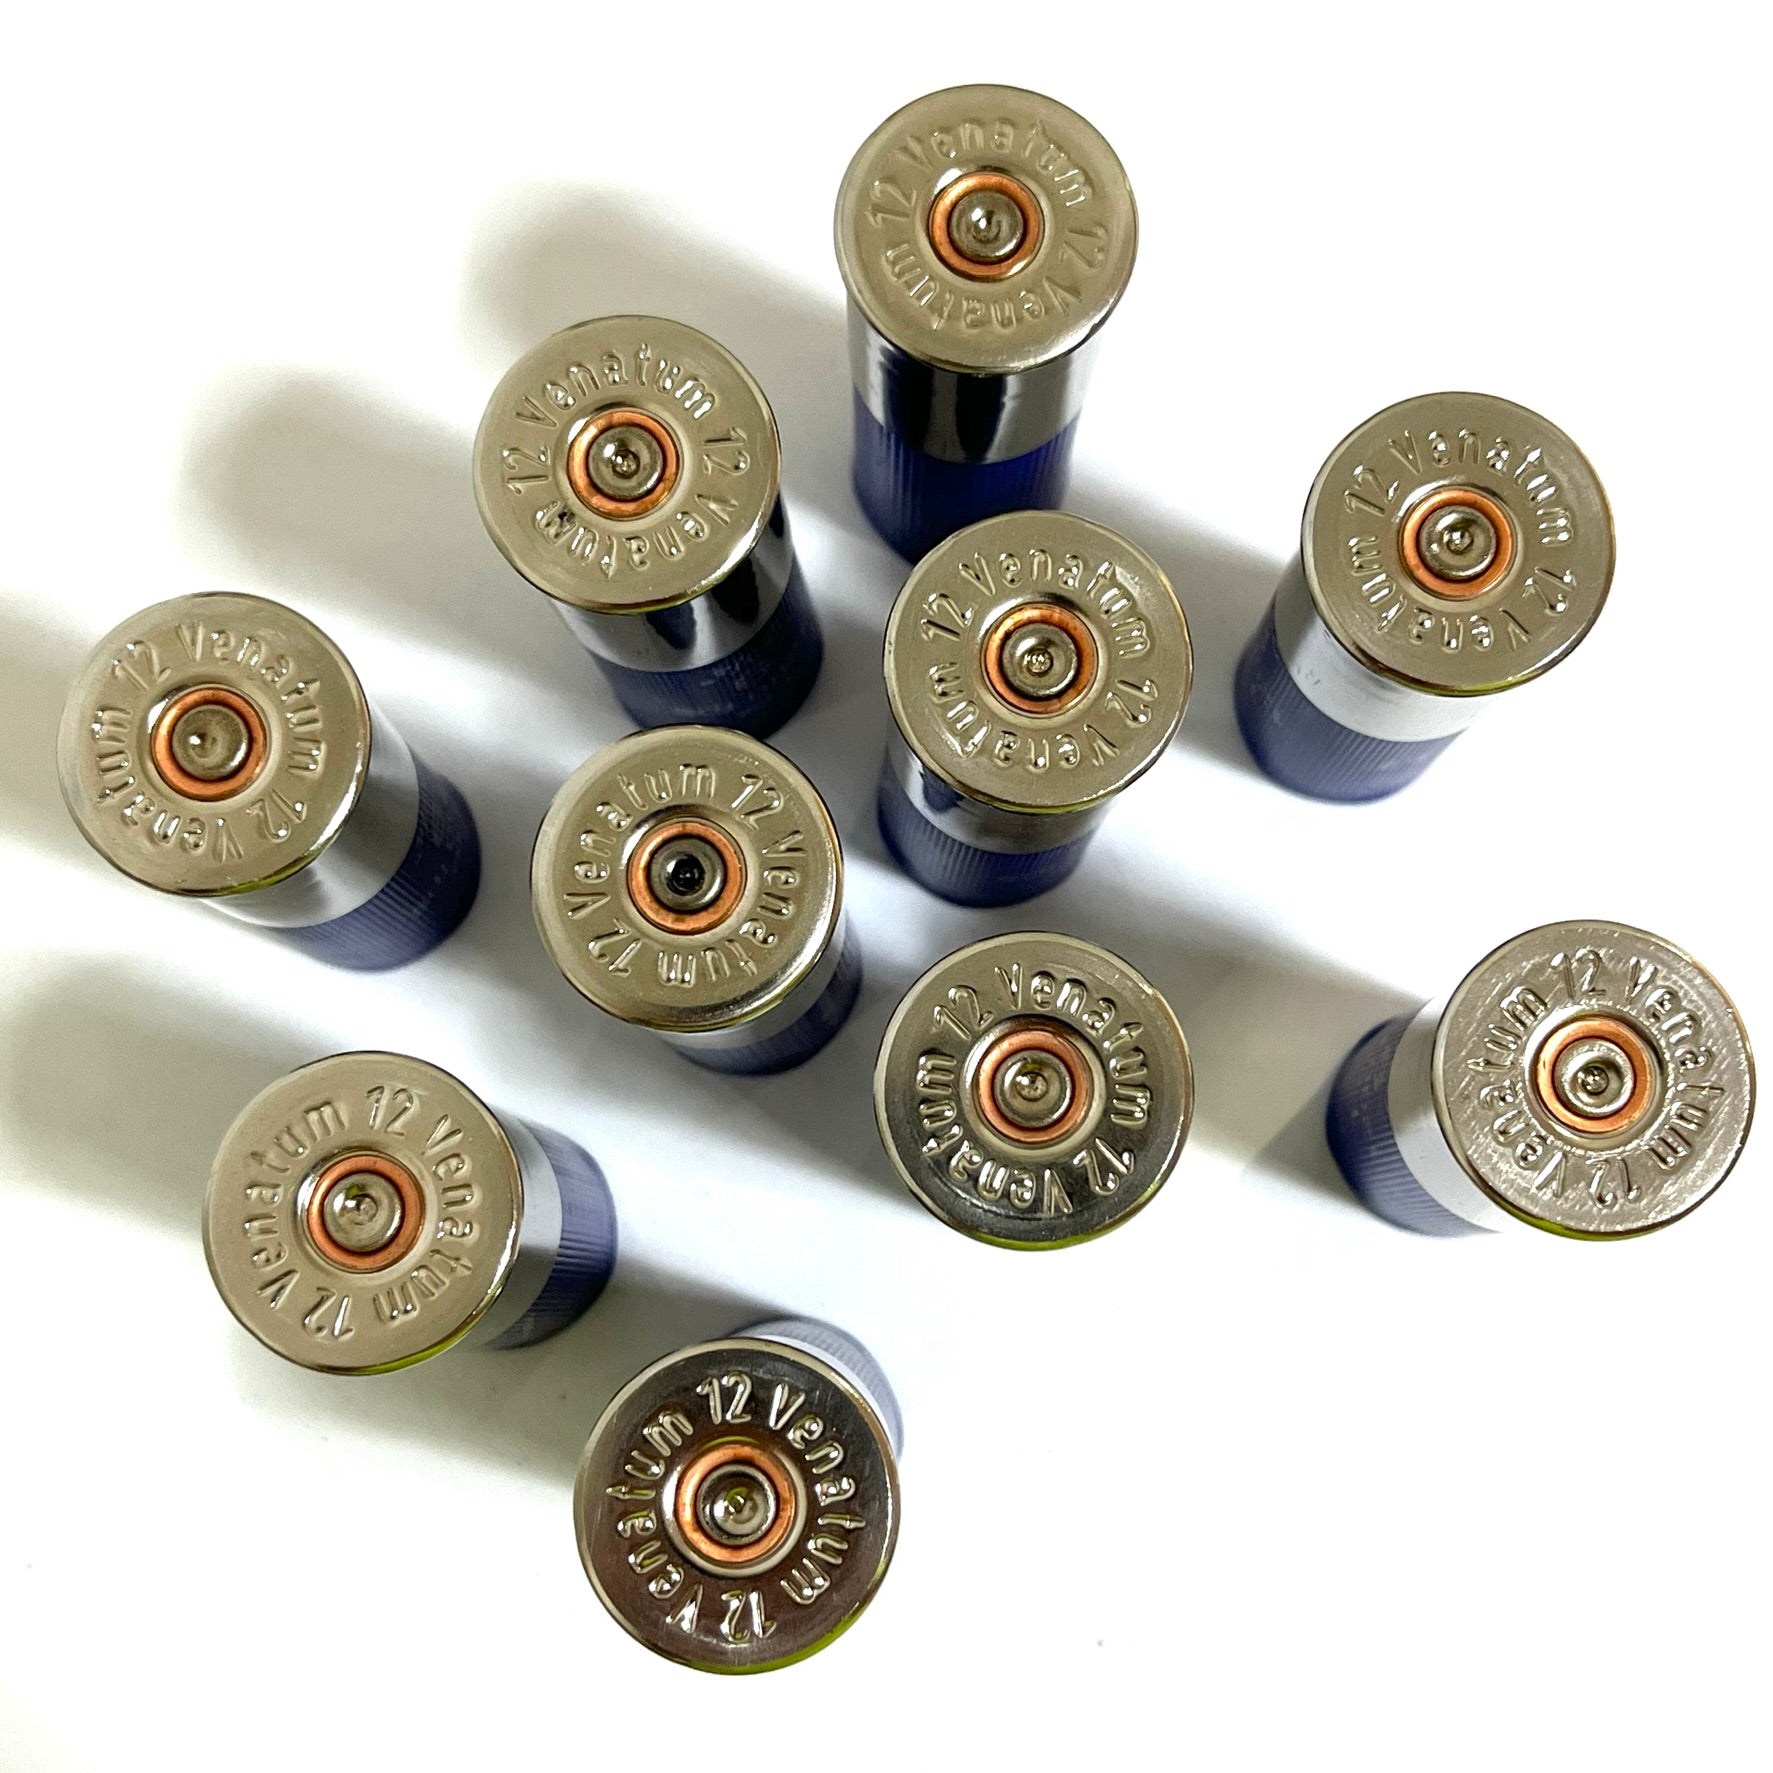 25 - DUMMY 9mm Luger Ammunition - Fake Prop Plastic Ammo Cartridge Model